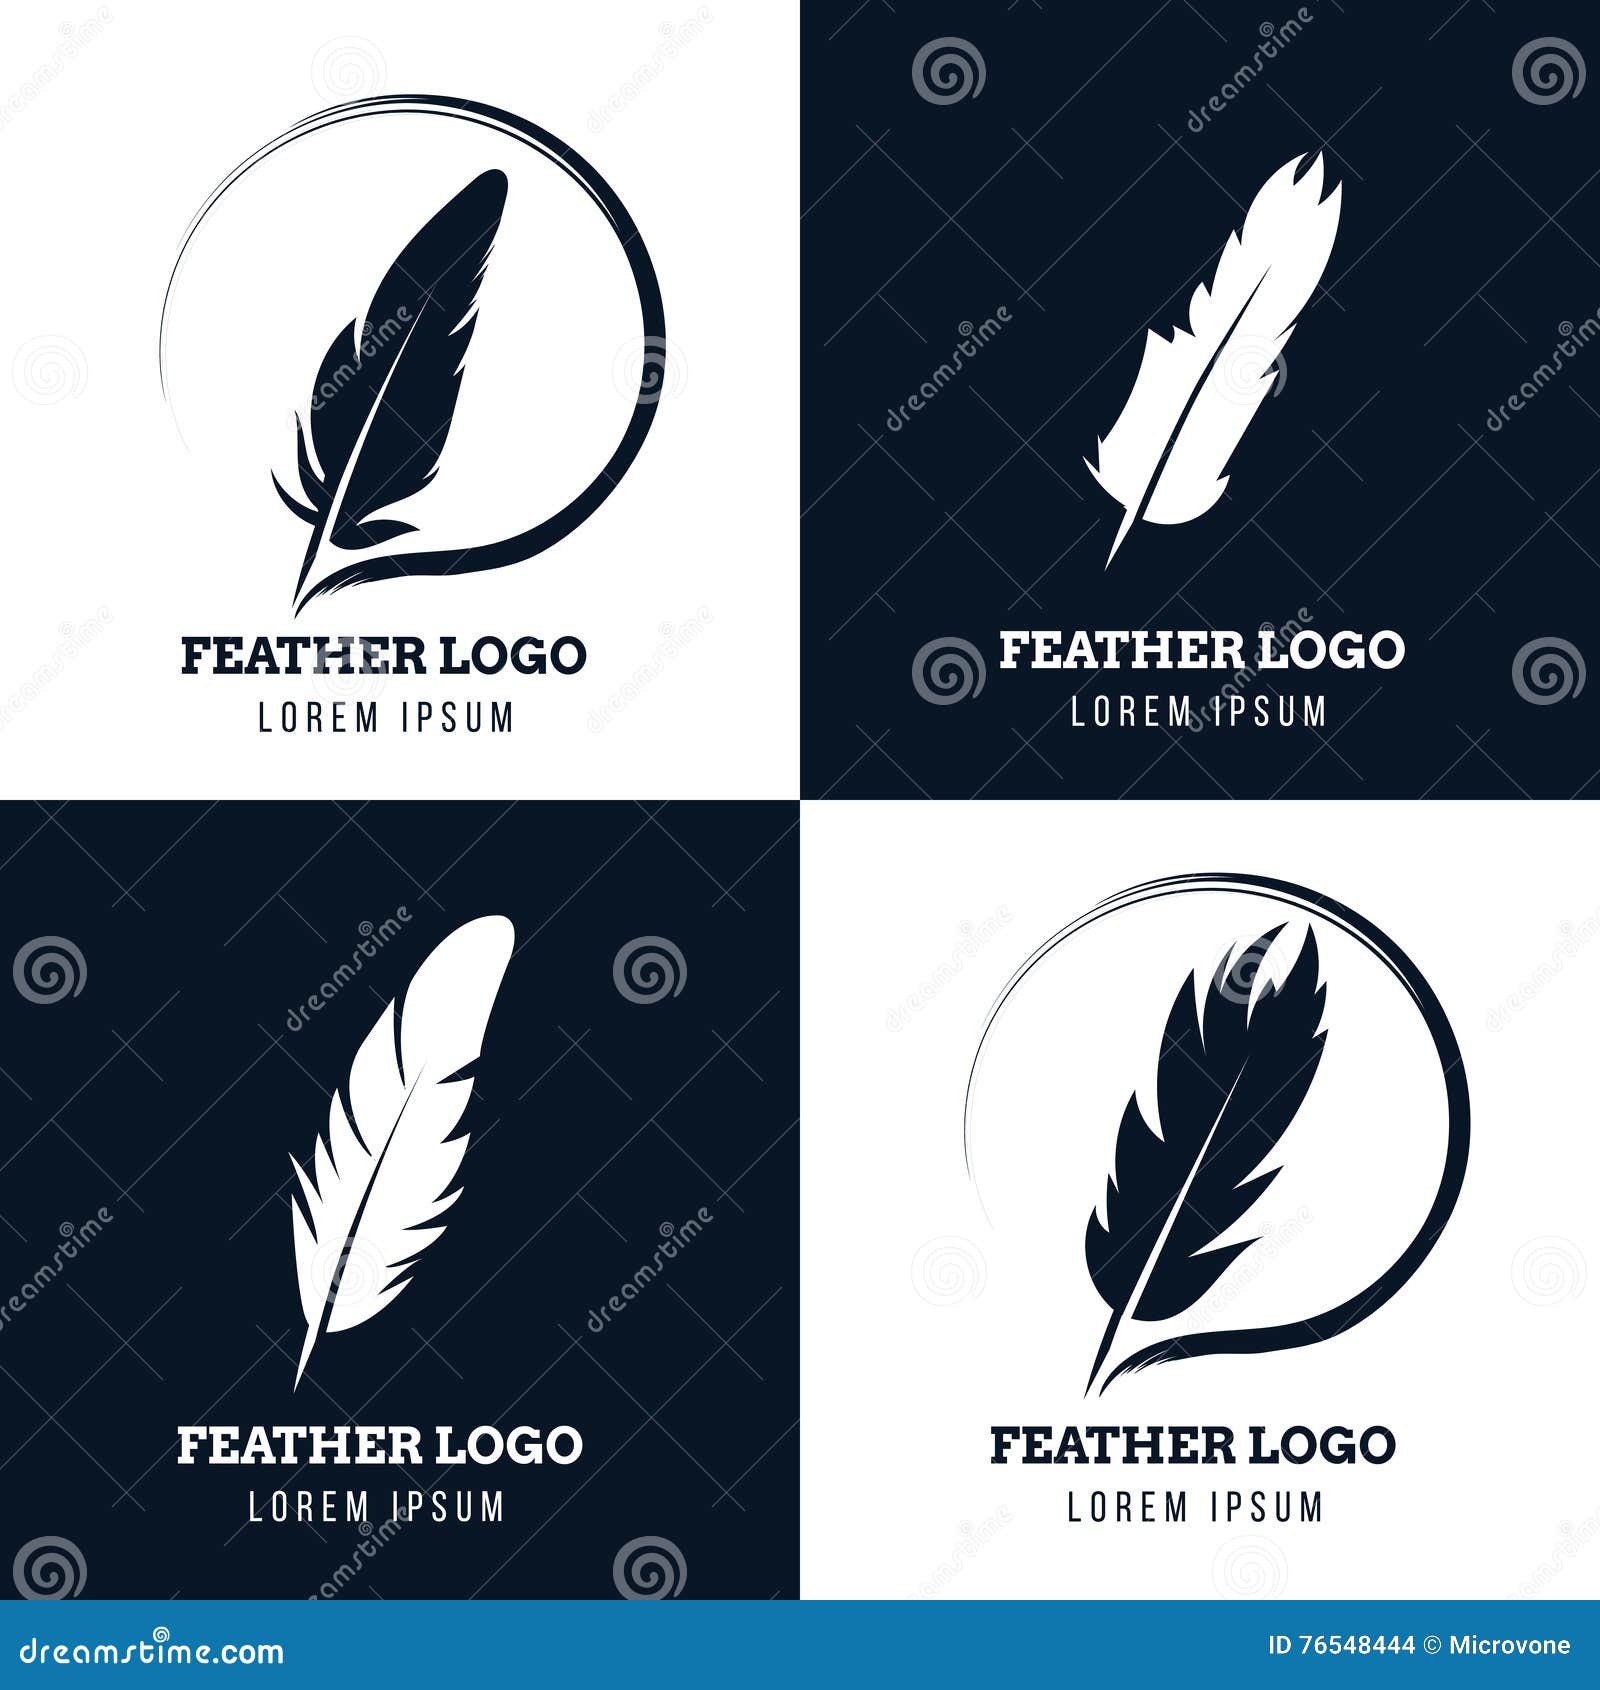 feather, elegant pen, law firm, lawyer, writer literary  logos set